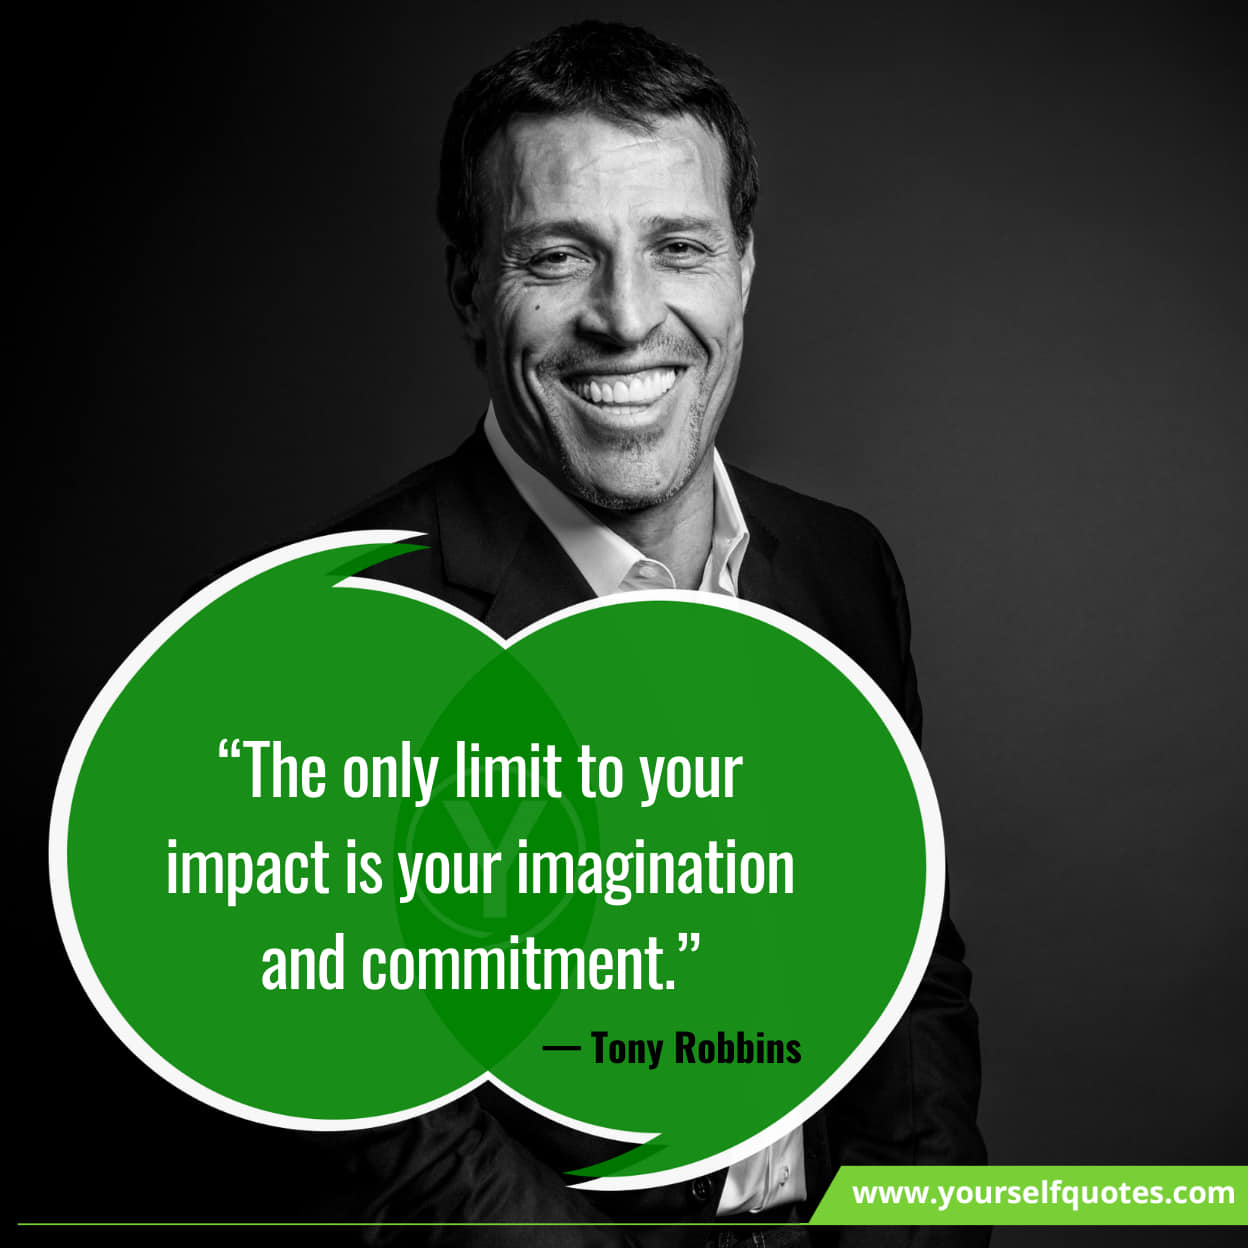 Inspiring Tony Robbins Quotes